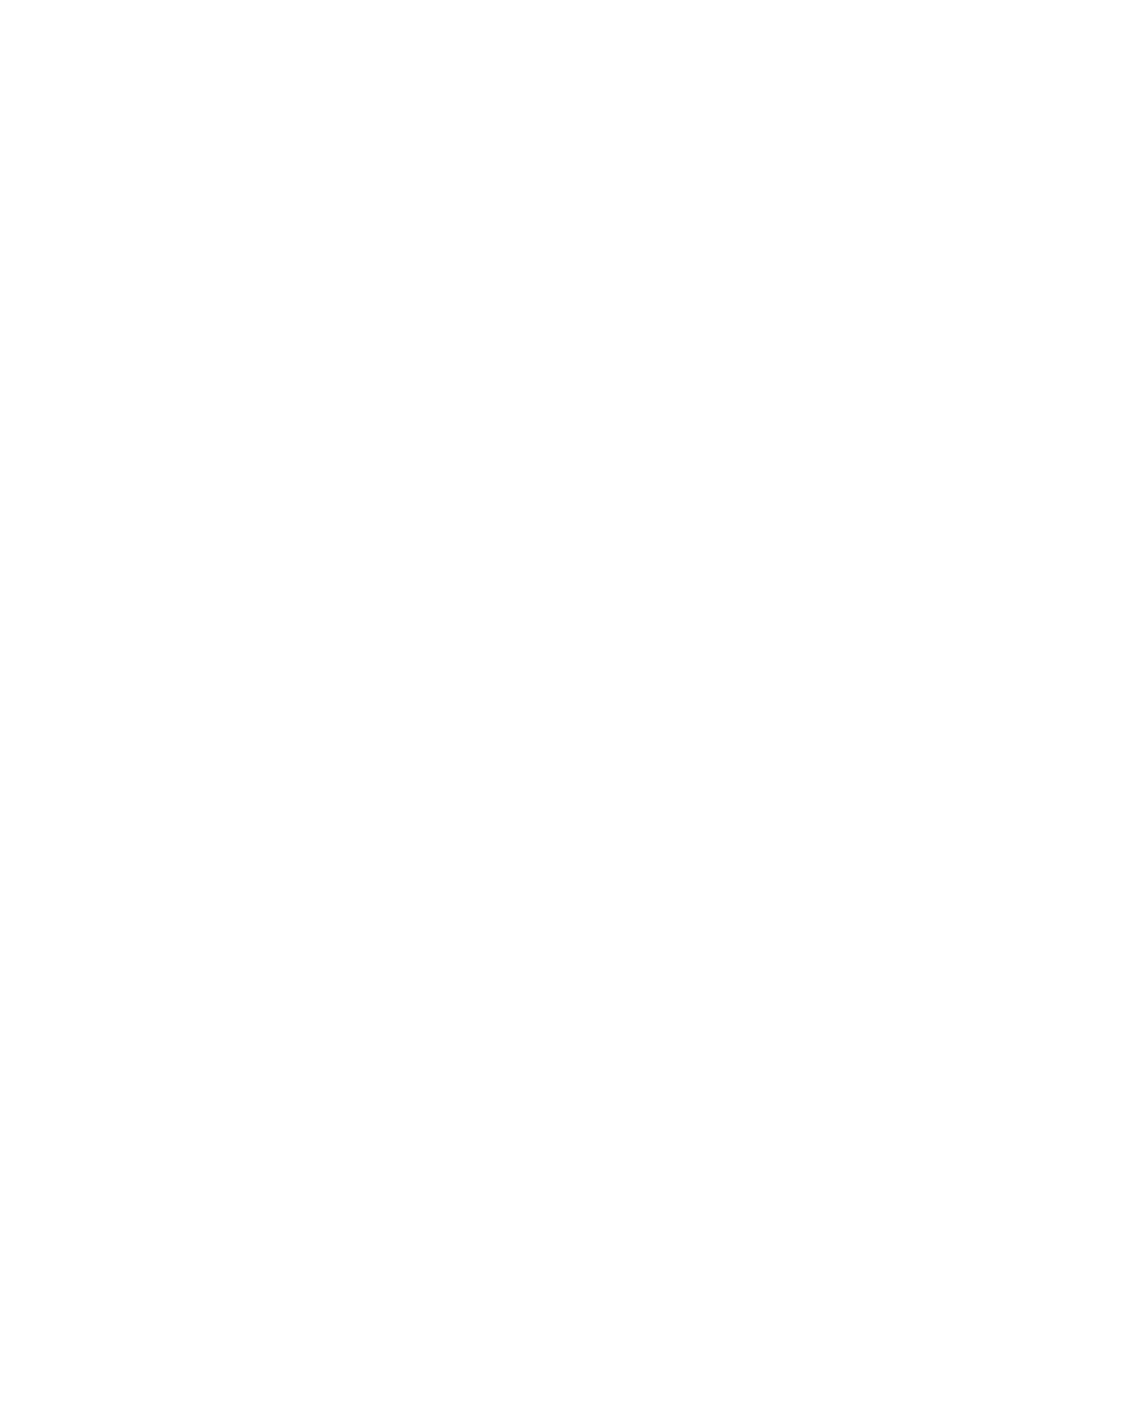 ACWA POWER Company logo pour fonds sombres (PNG transparent)